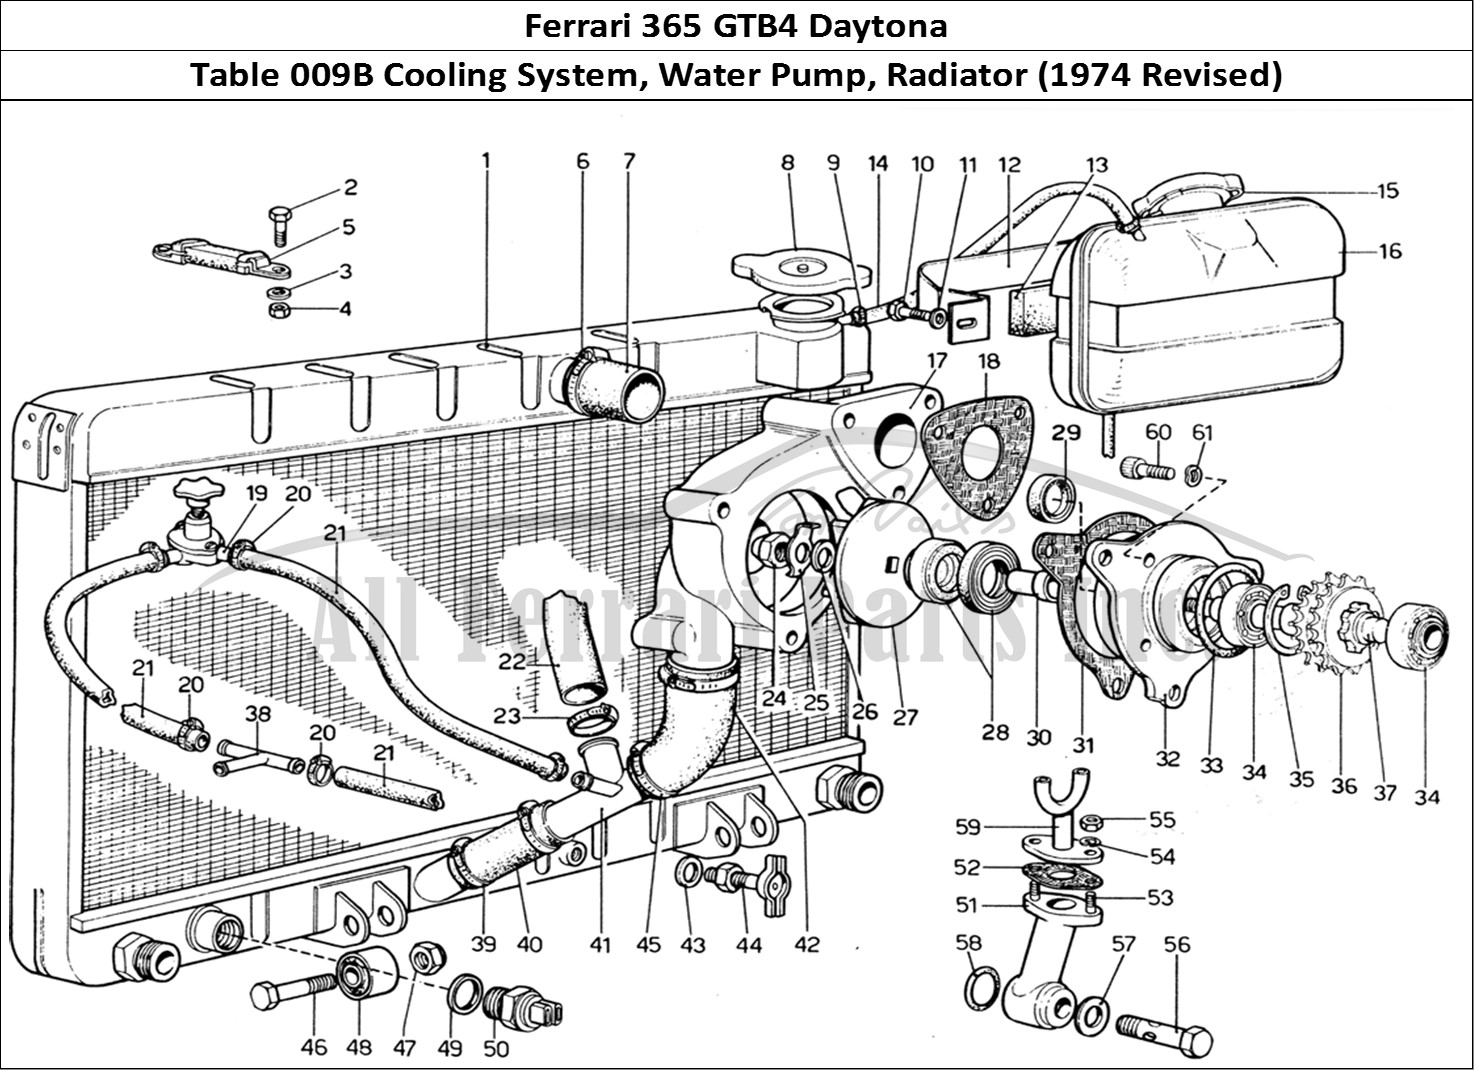 Ferrari Parts Ferrari 365 GTB4 Daytona (1969) Page 009 Cooling System - Water Pu